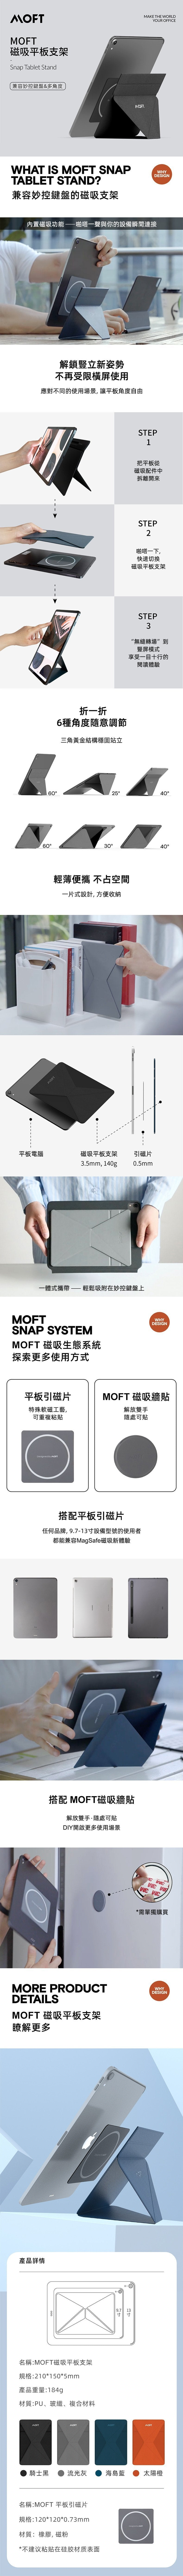 MOFT - MOFT 平板支架 | Snap 磁吸平板支架 - 太空灰